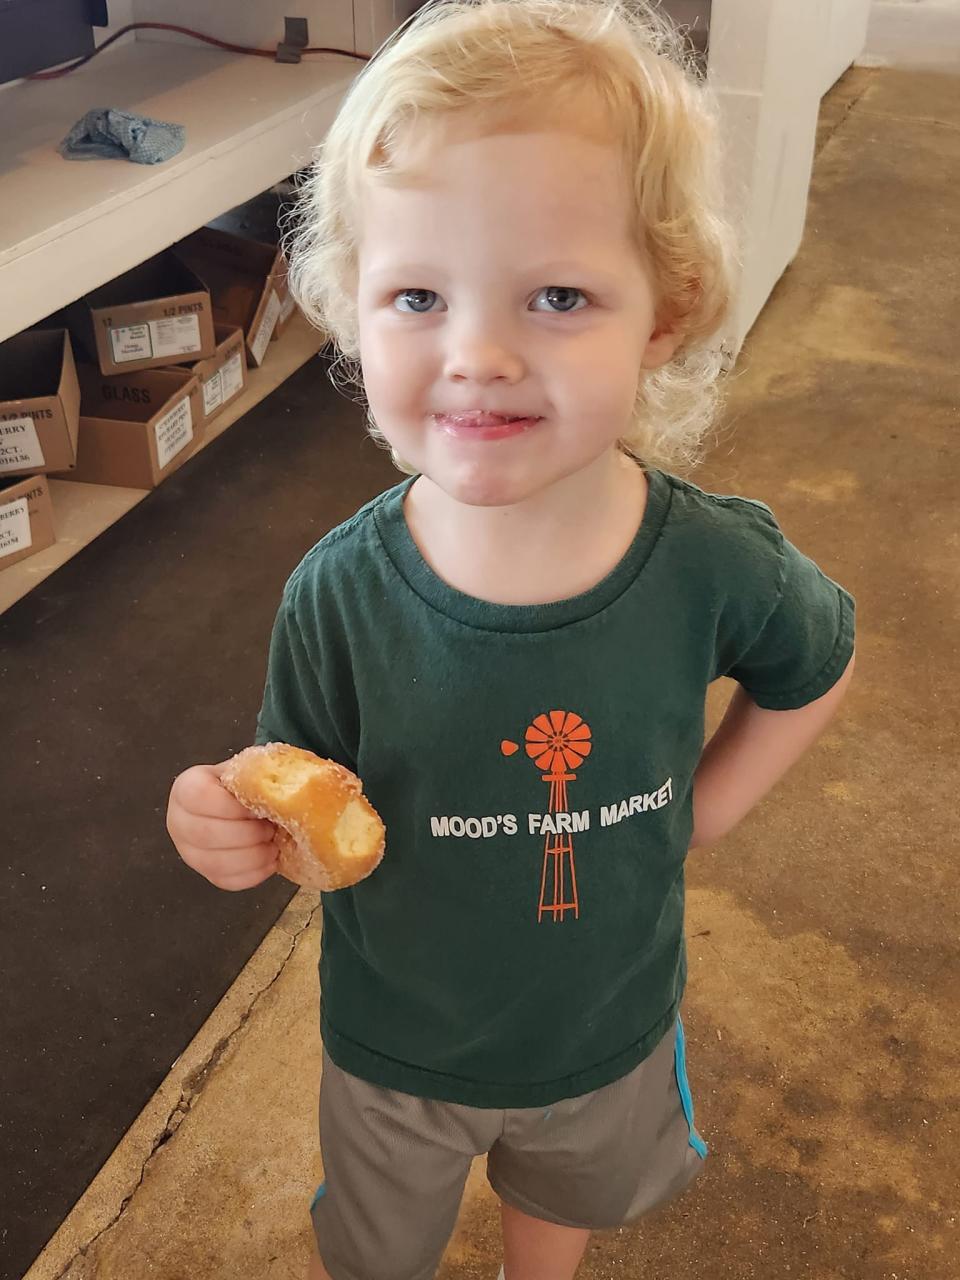 Mood's Farm Market's youngest employee Joey enjoys a donut.